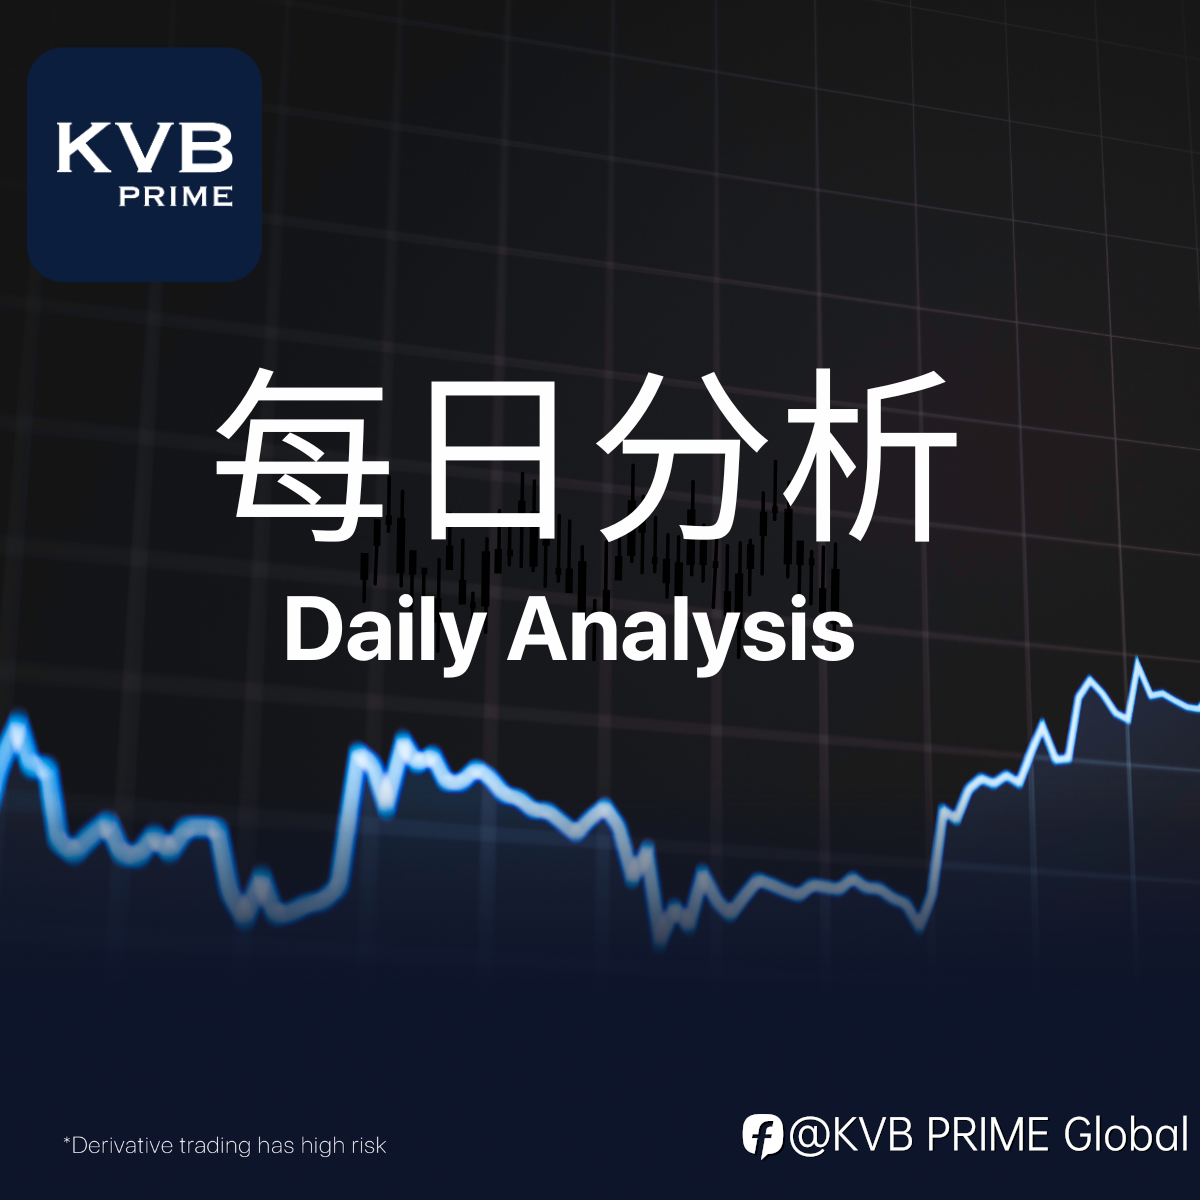 KVB PRIME Daily Analysis